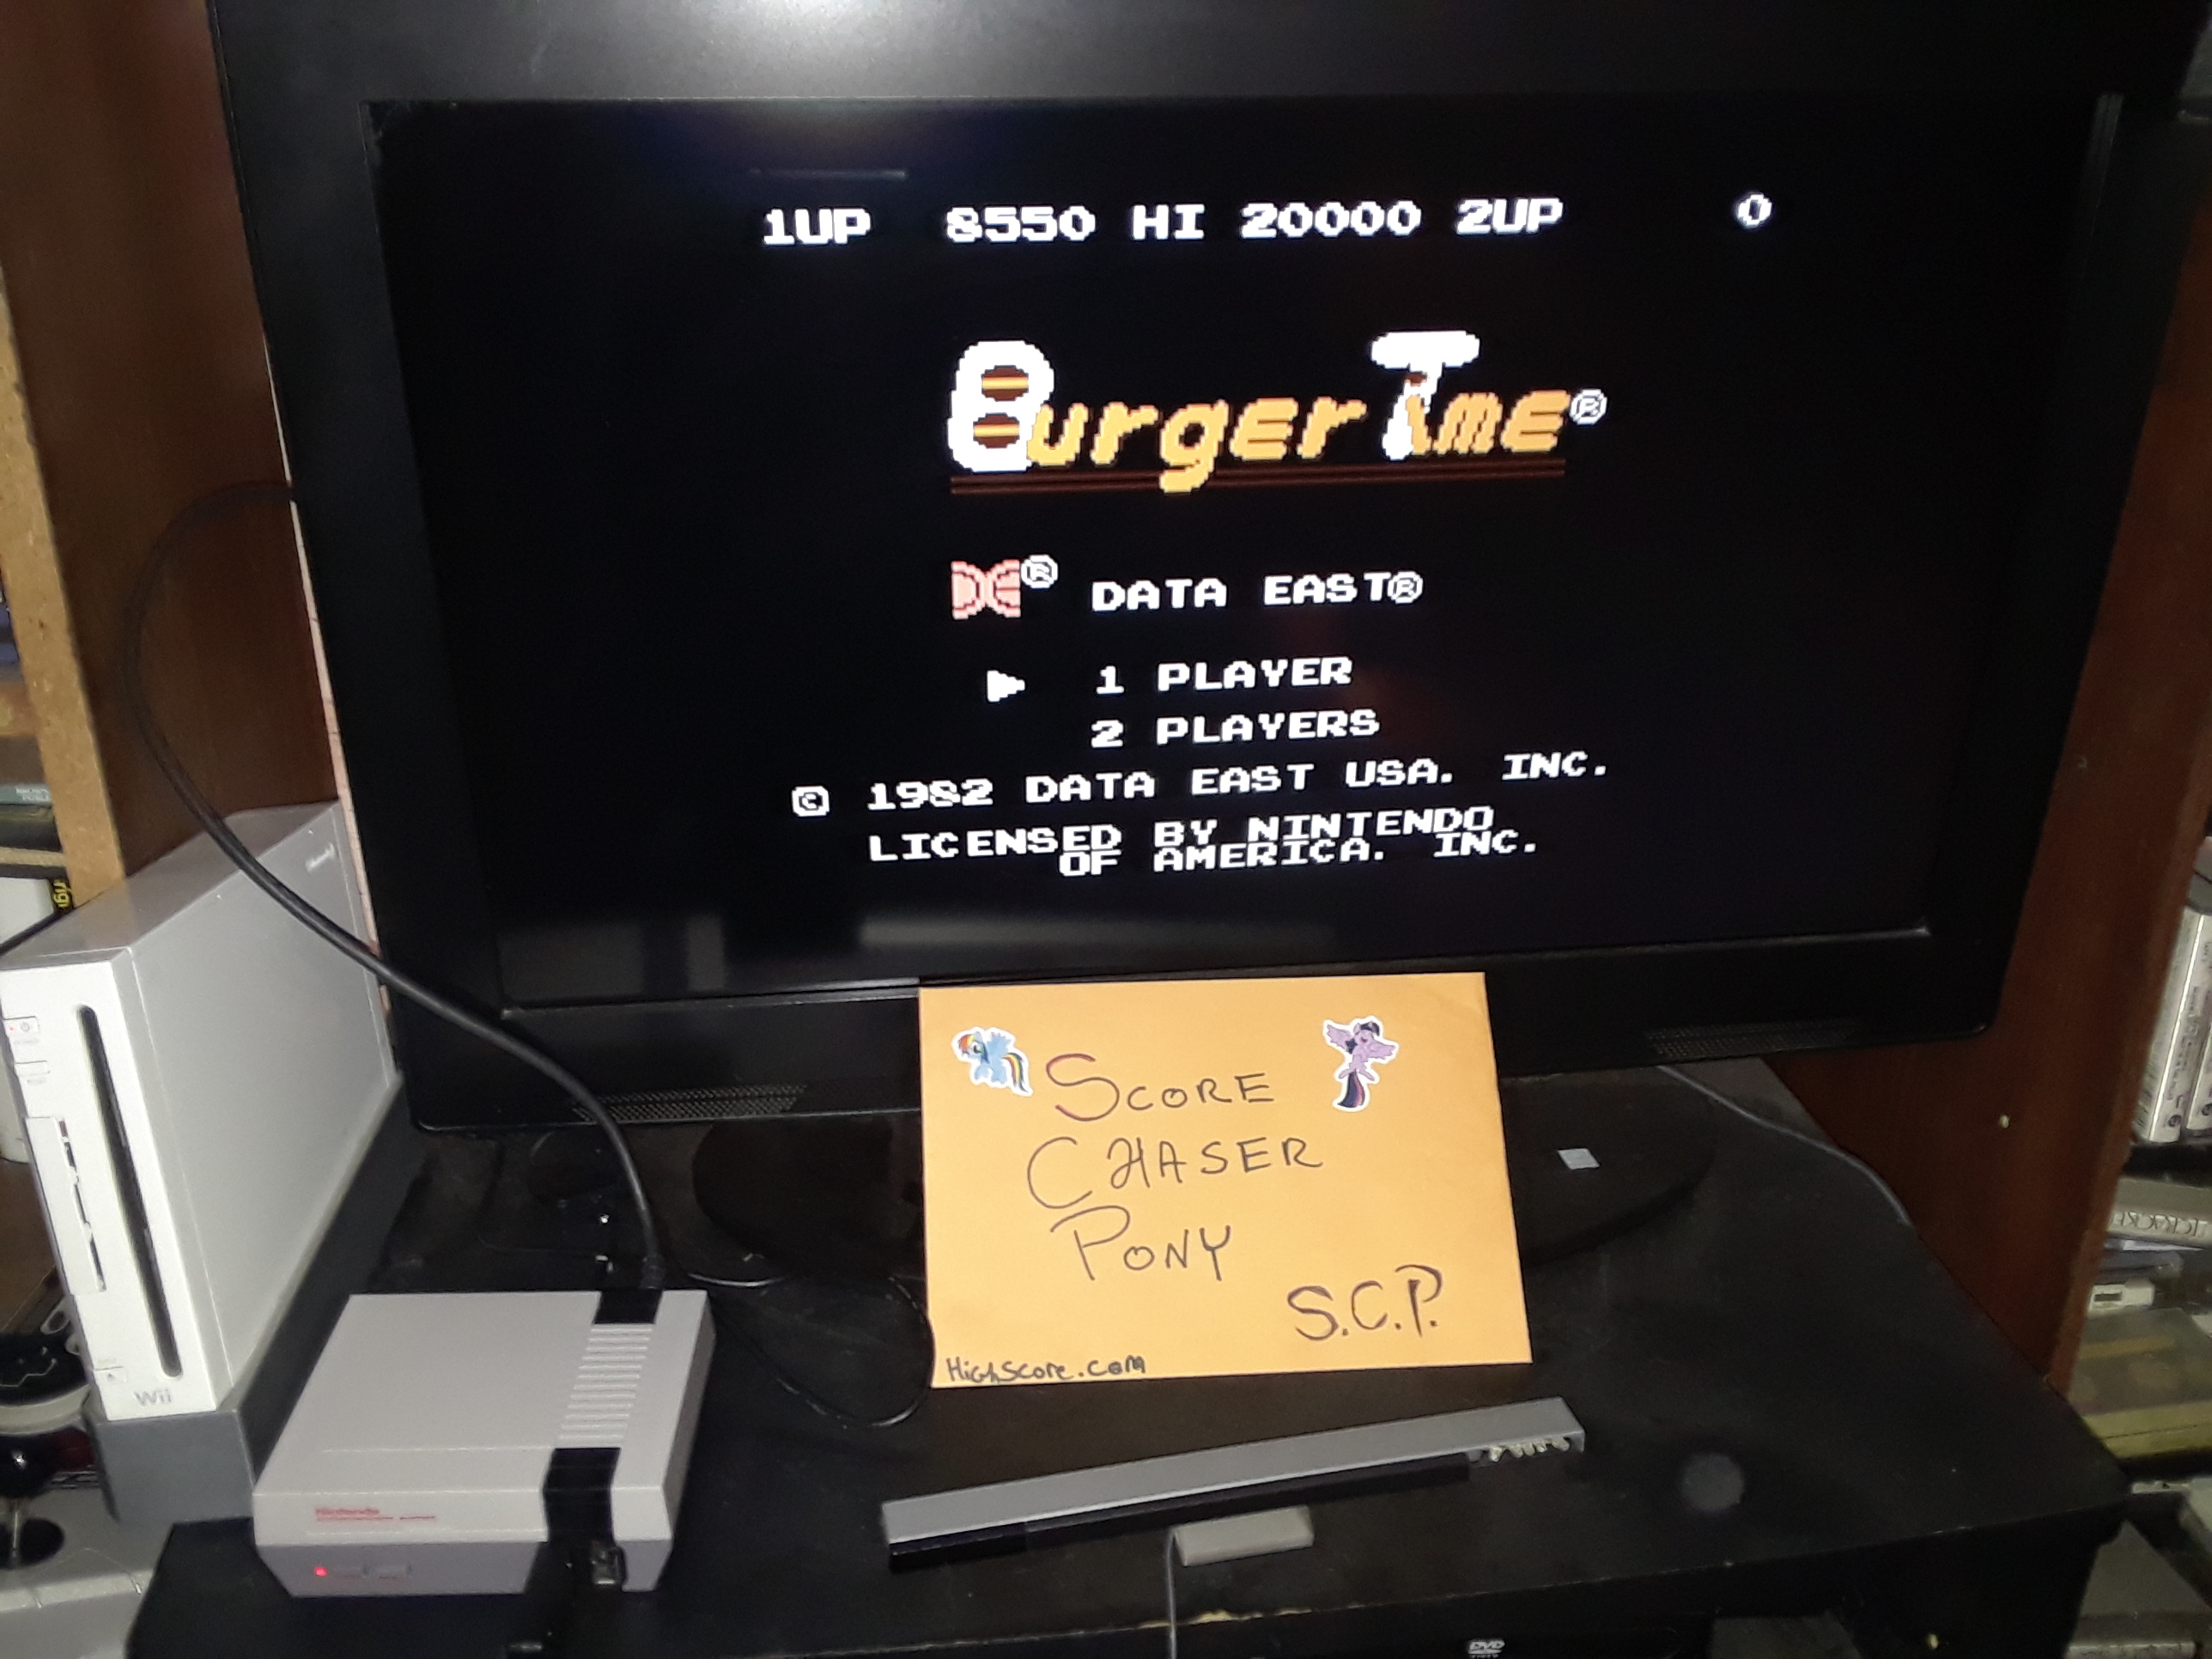 BurgerTime 8,550 points